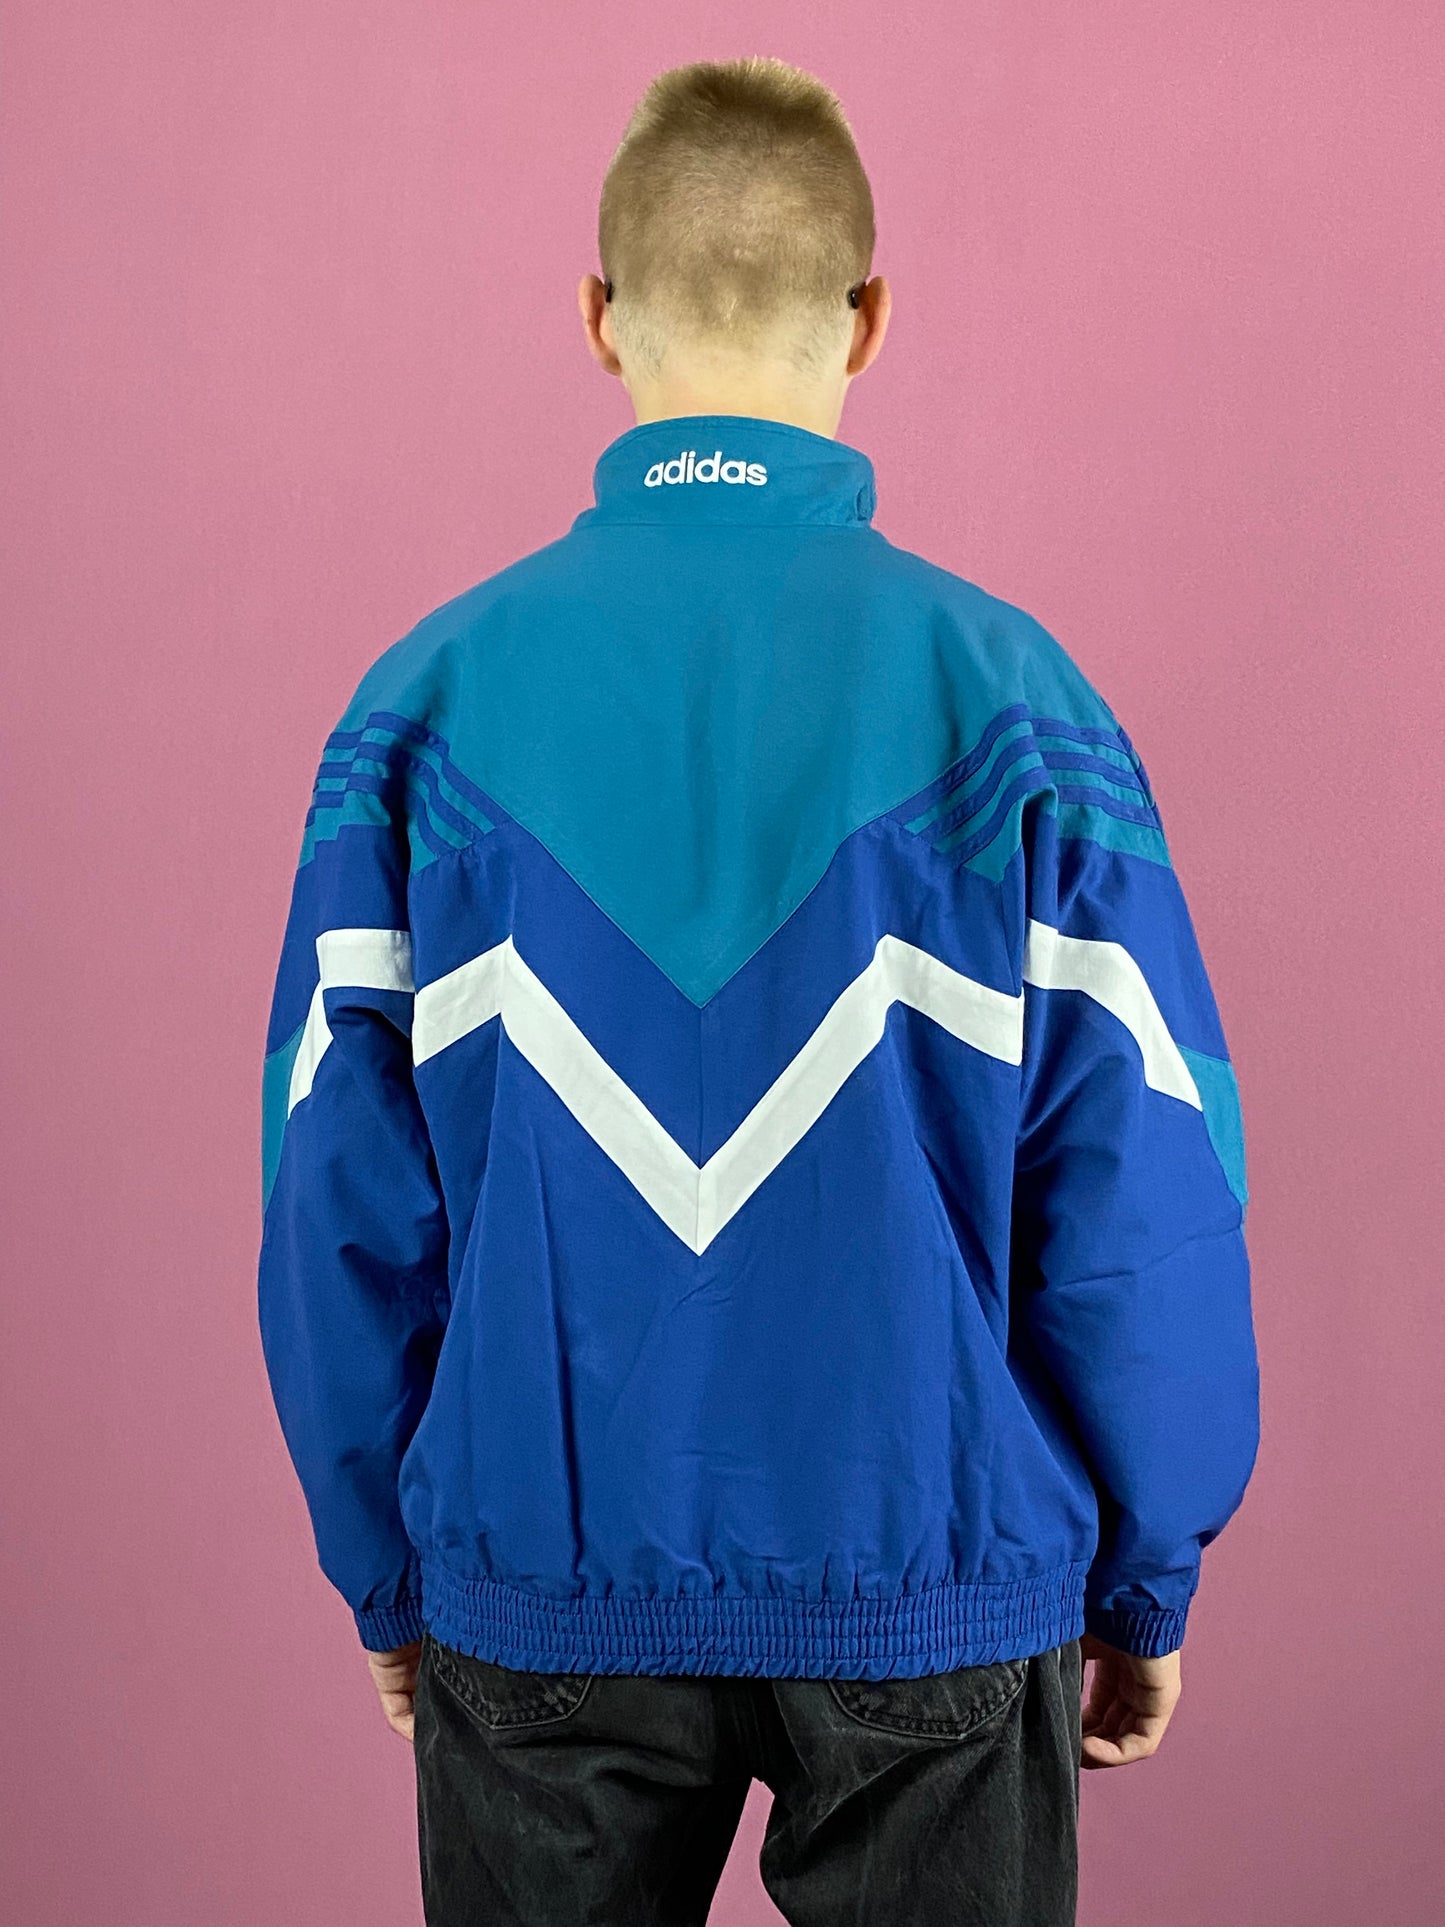 90s Adidas Vintage Men's Windbreaker Jacket - Medium Blue Polyester